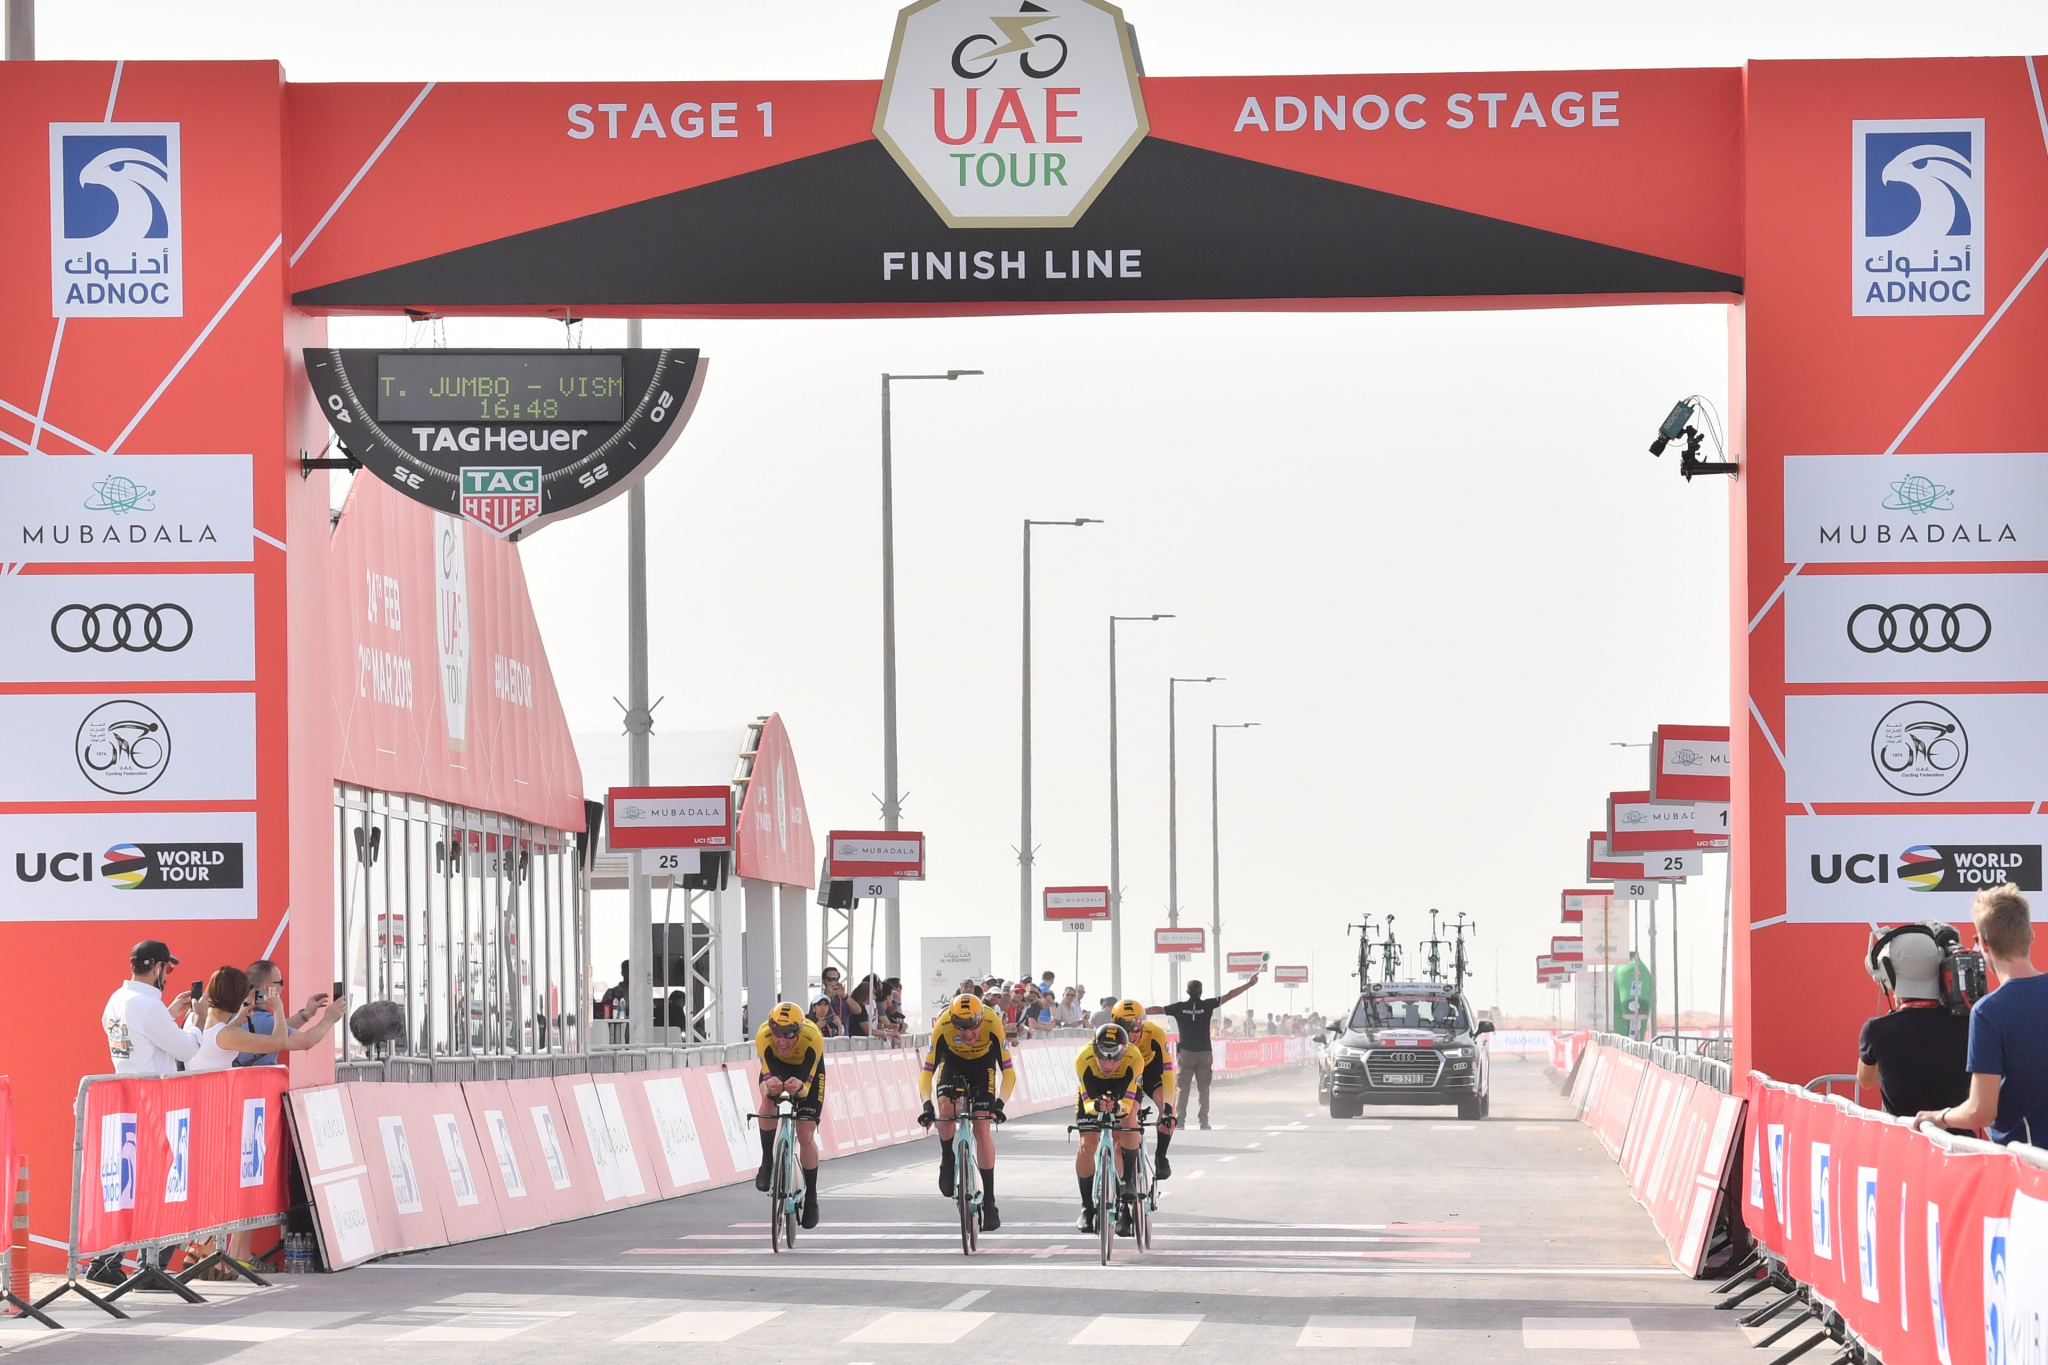 Team Jumbo-Visma won the team time trial as the UAE Tour began ©LaPresse/Ferrari- Paolone